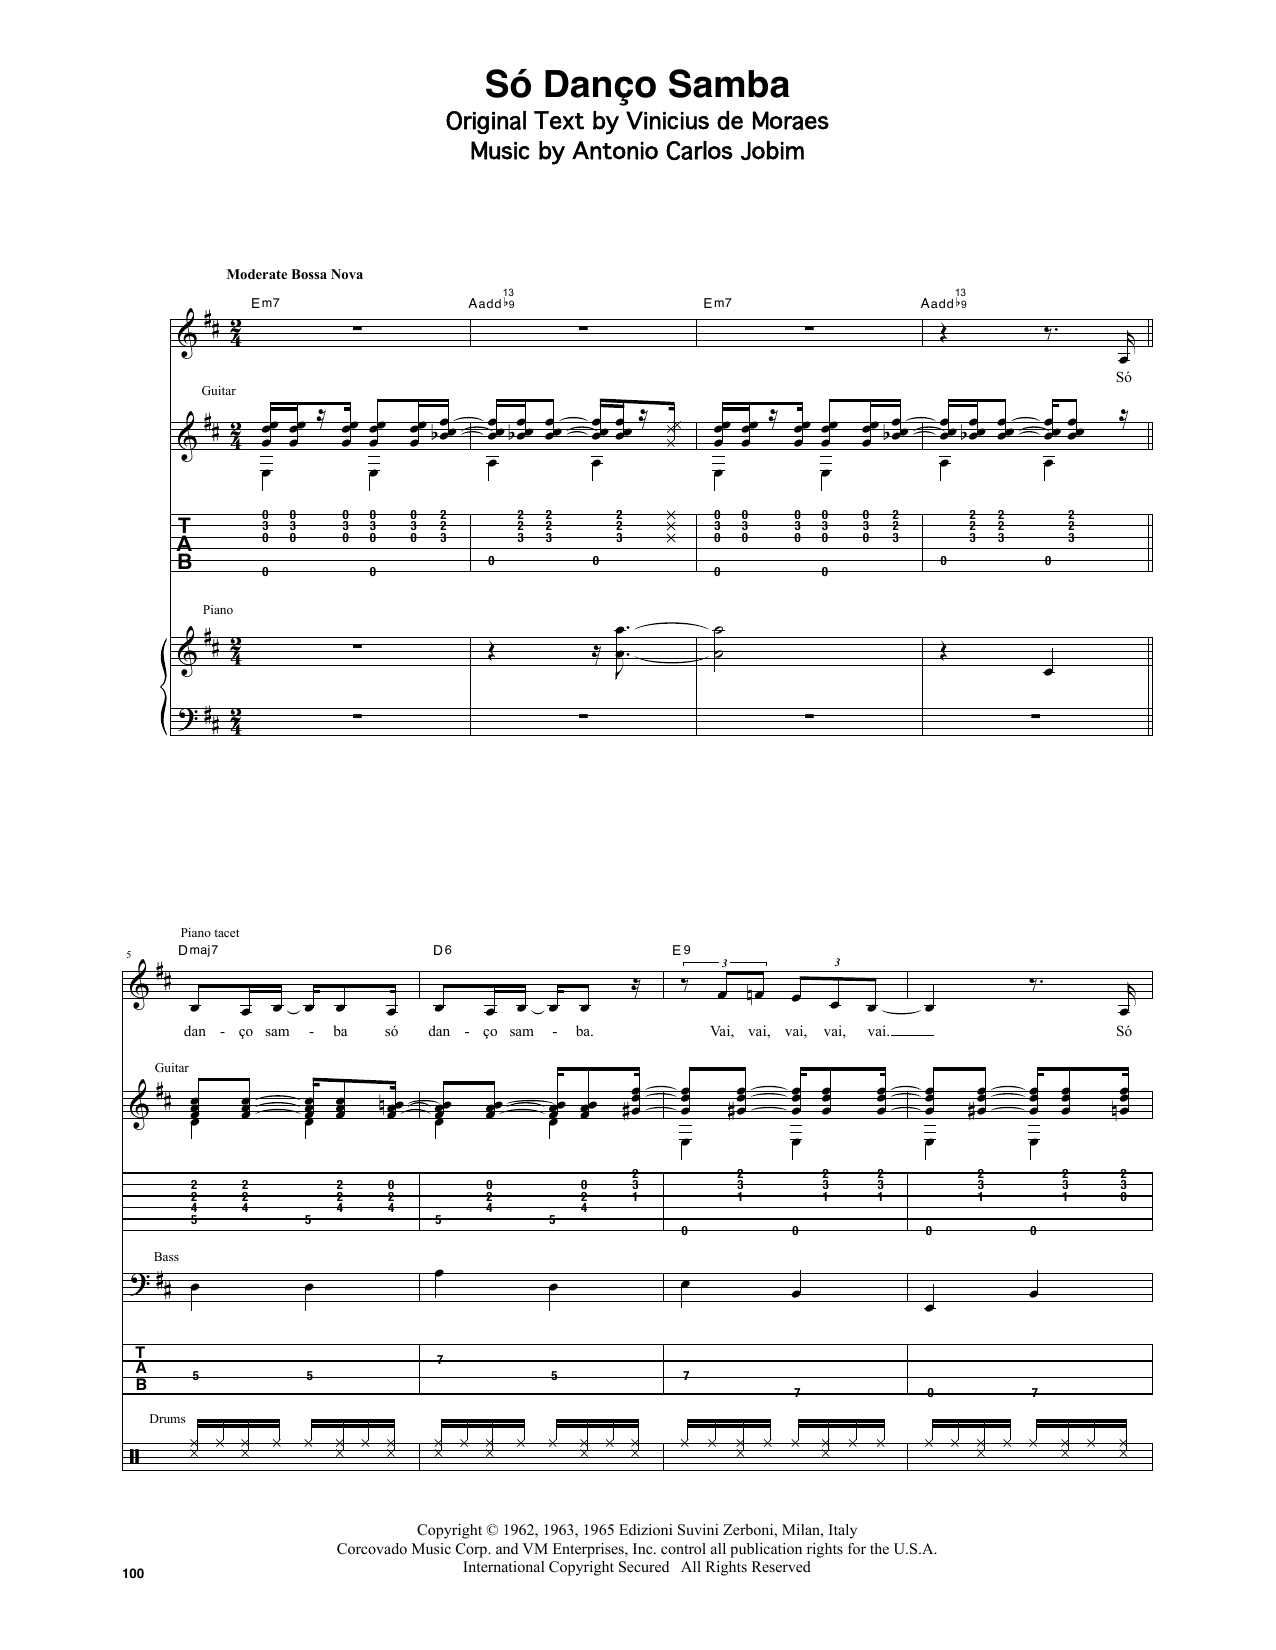 Download Stan Getz & João Gilberto Jazz 'N' Samba (So Danco Samba) Sheet Music and learn how to play Transcribed Score PDF digital score in minutes